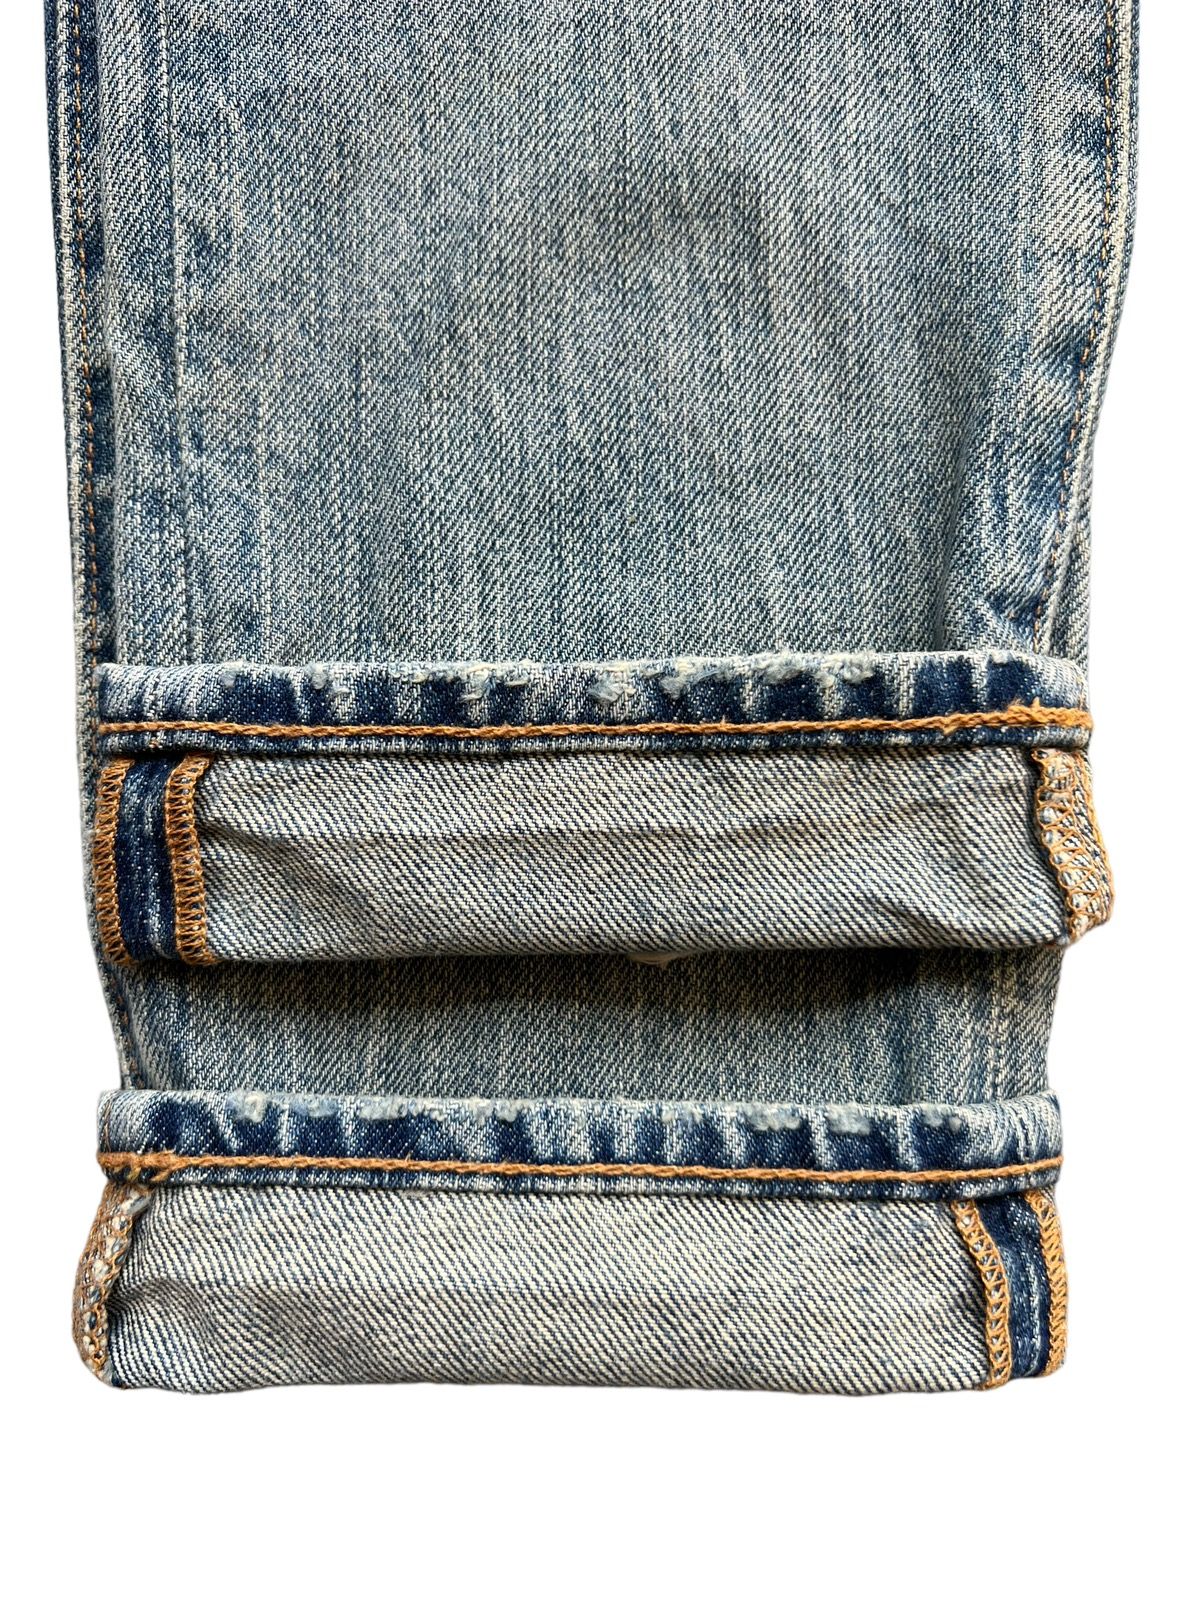 Ralph Lauren Rusty Ripped Distressed Denim Jeans 28x29 - 7